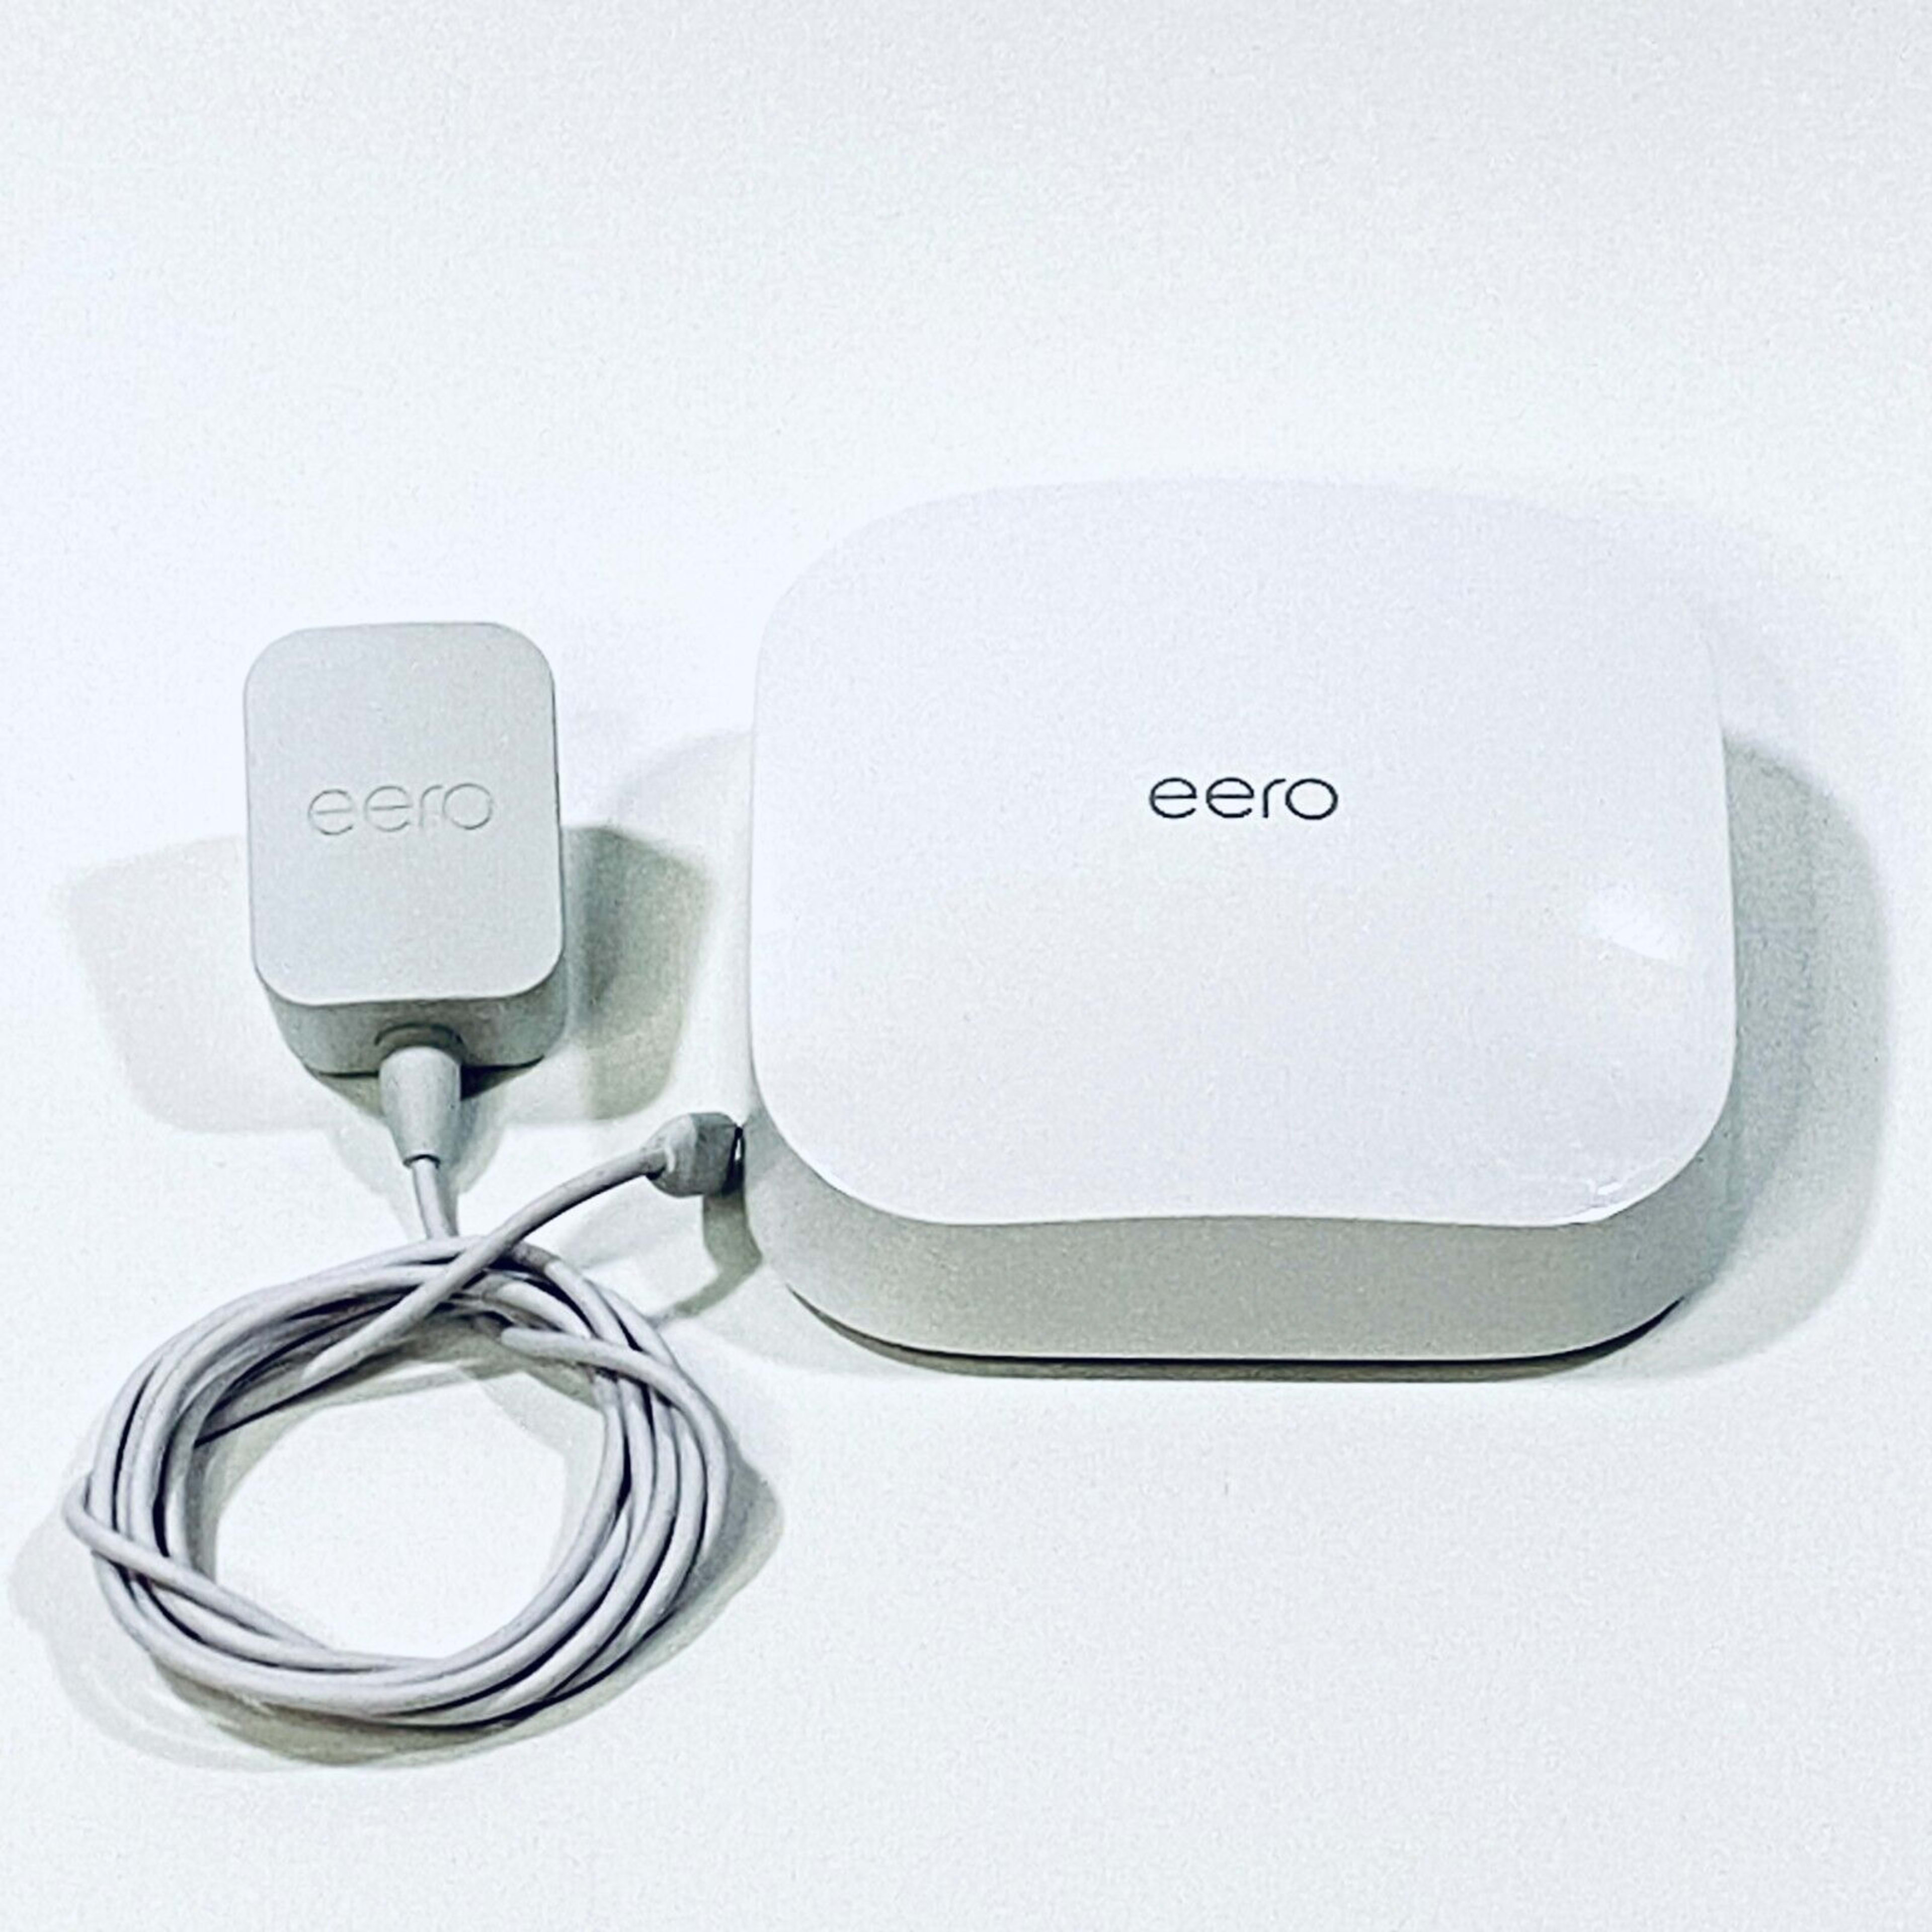 EERO Pro 6 Tri-band Wi-Fi 6 Gigabit Speed Mesh Wi-Fi Router K010001